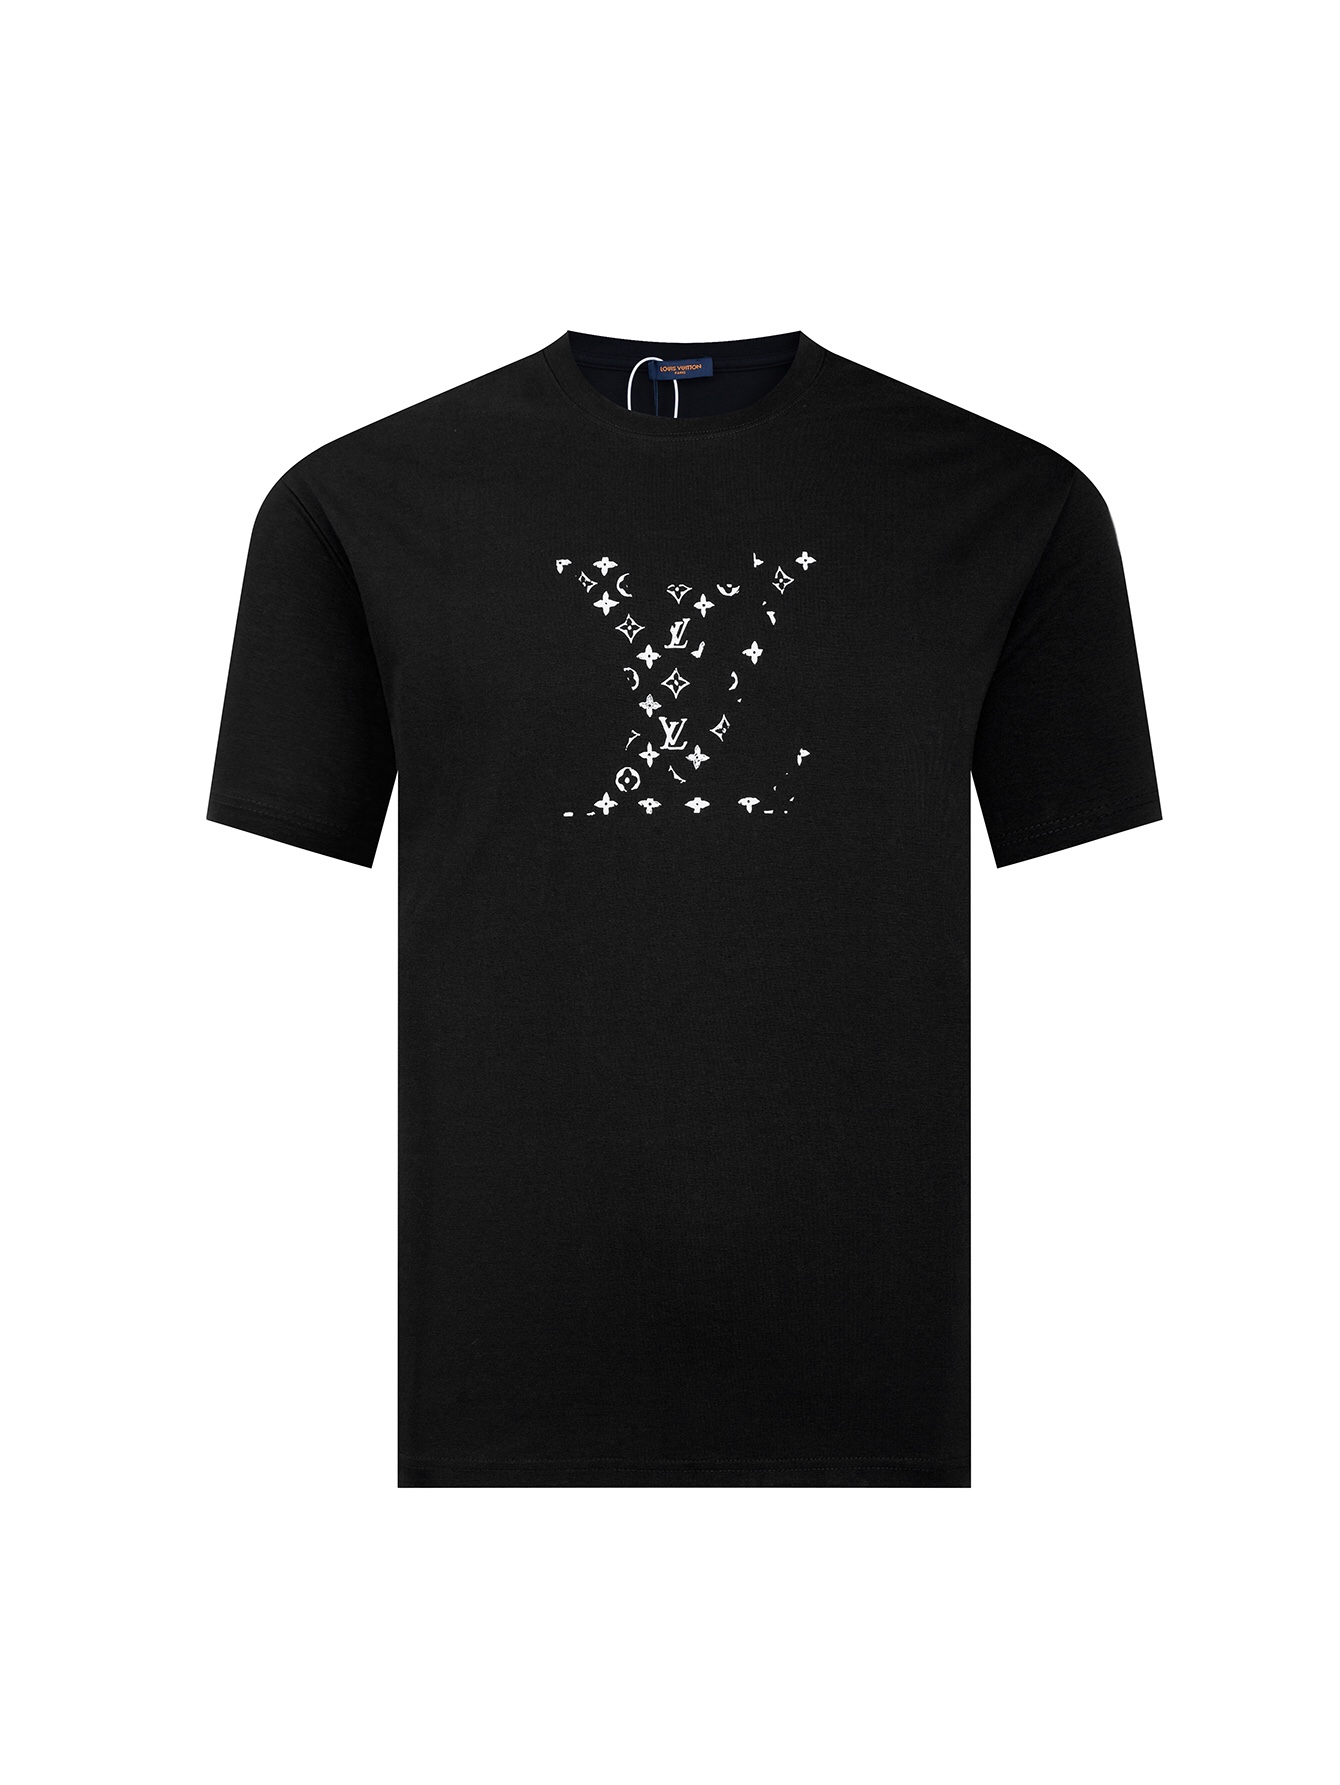 Best Quality Designer
 Louis Vuitton 1:1
 Clothing T-Shirt Black Blue Printing Unisex Short Sleeve